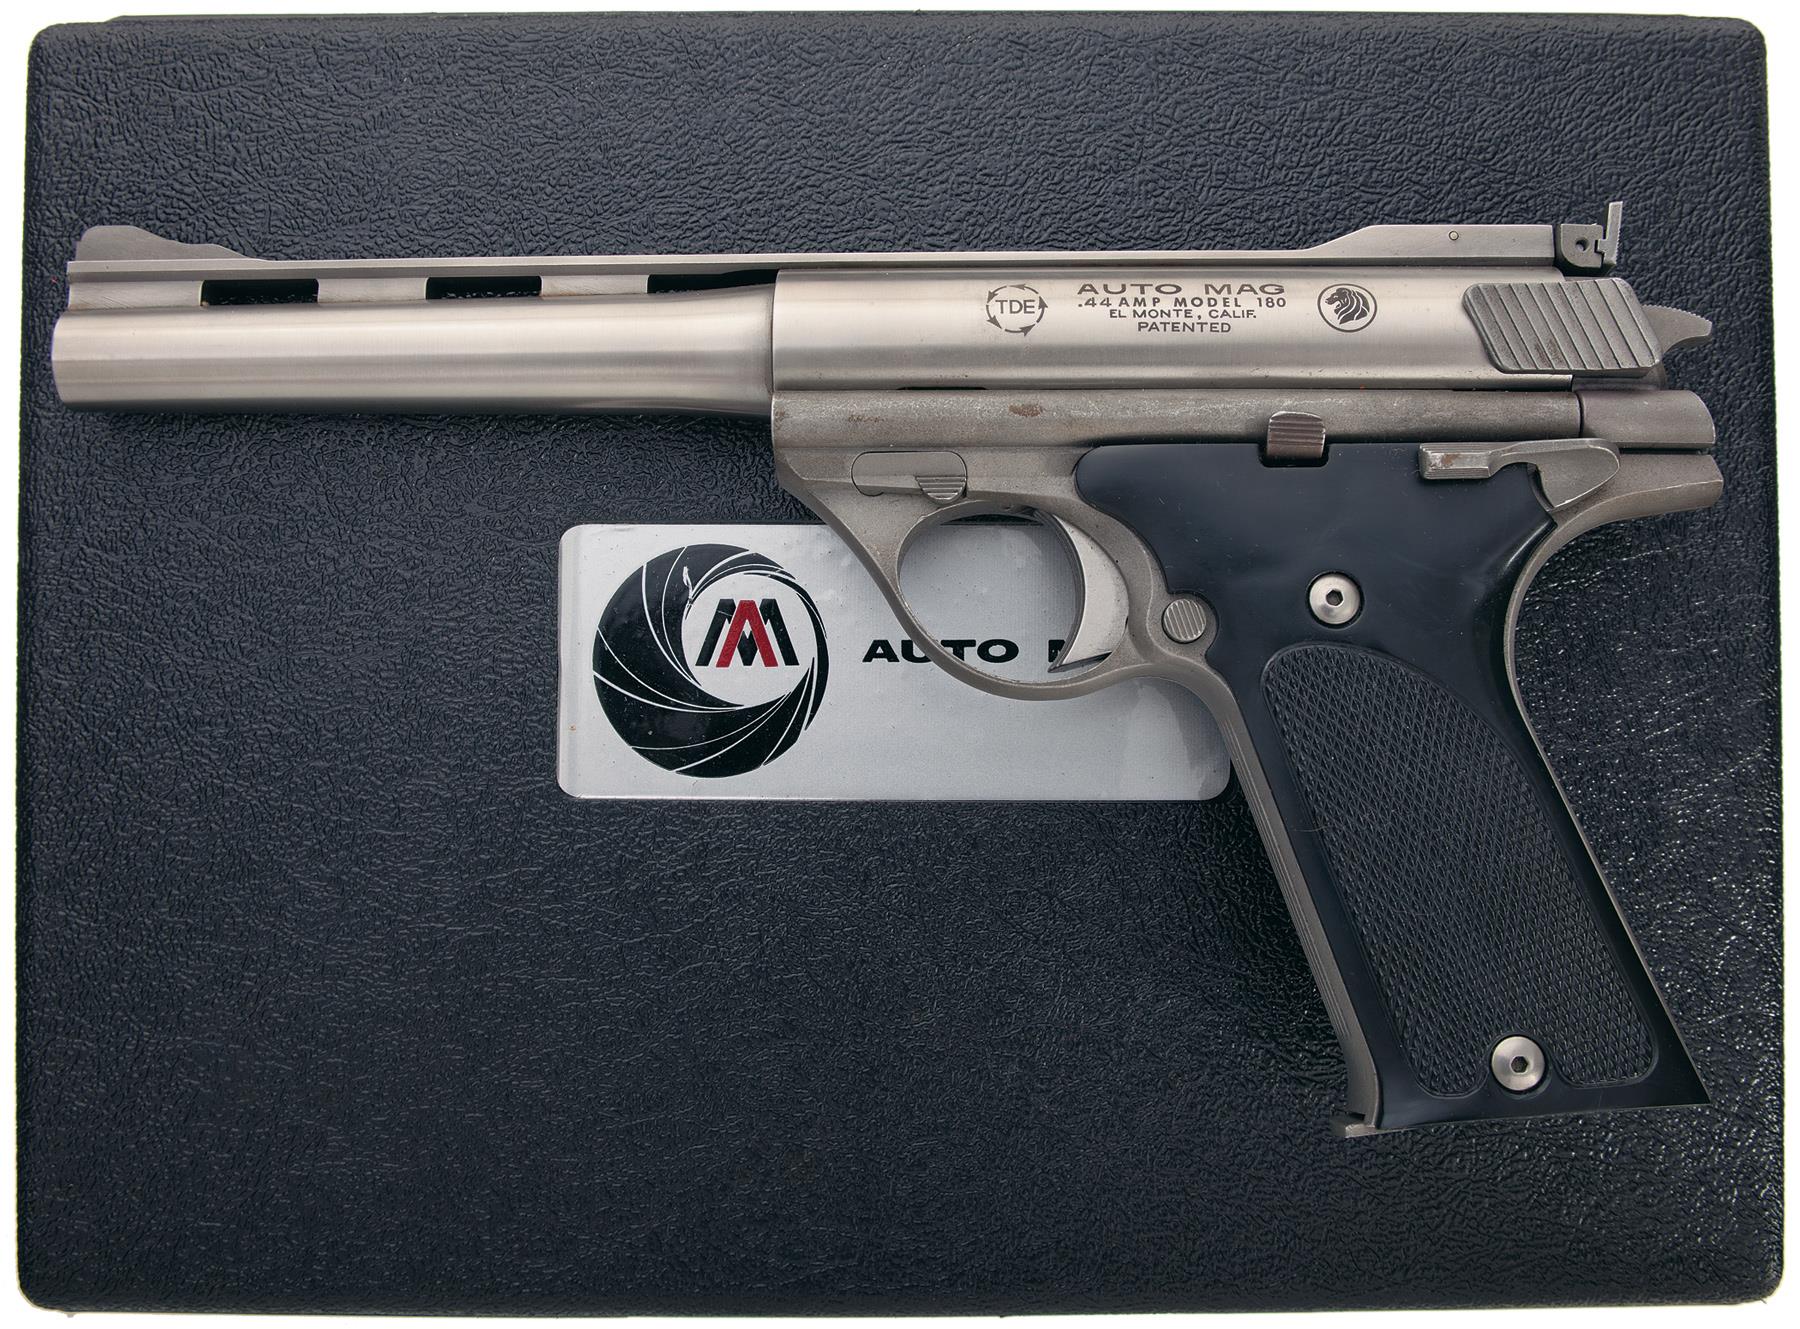 Auto Mag Model 180 Semi-Automatic Pistol in 44 AMP with Case